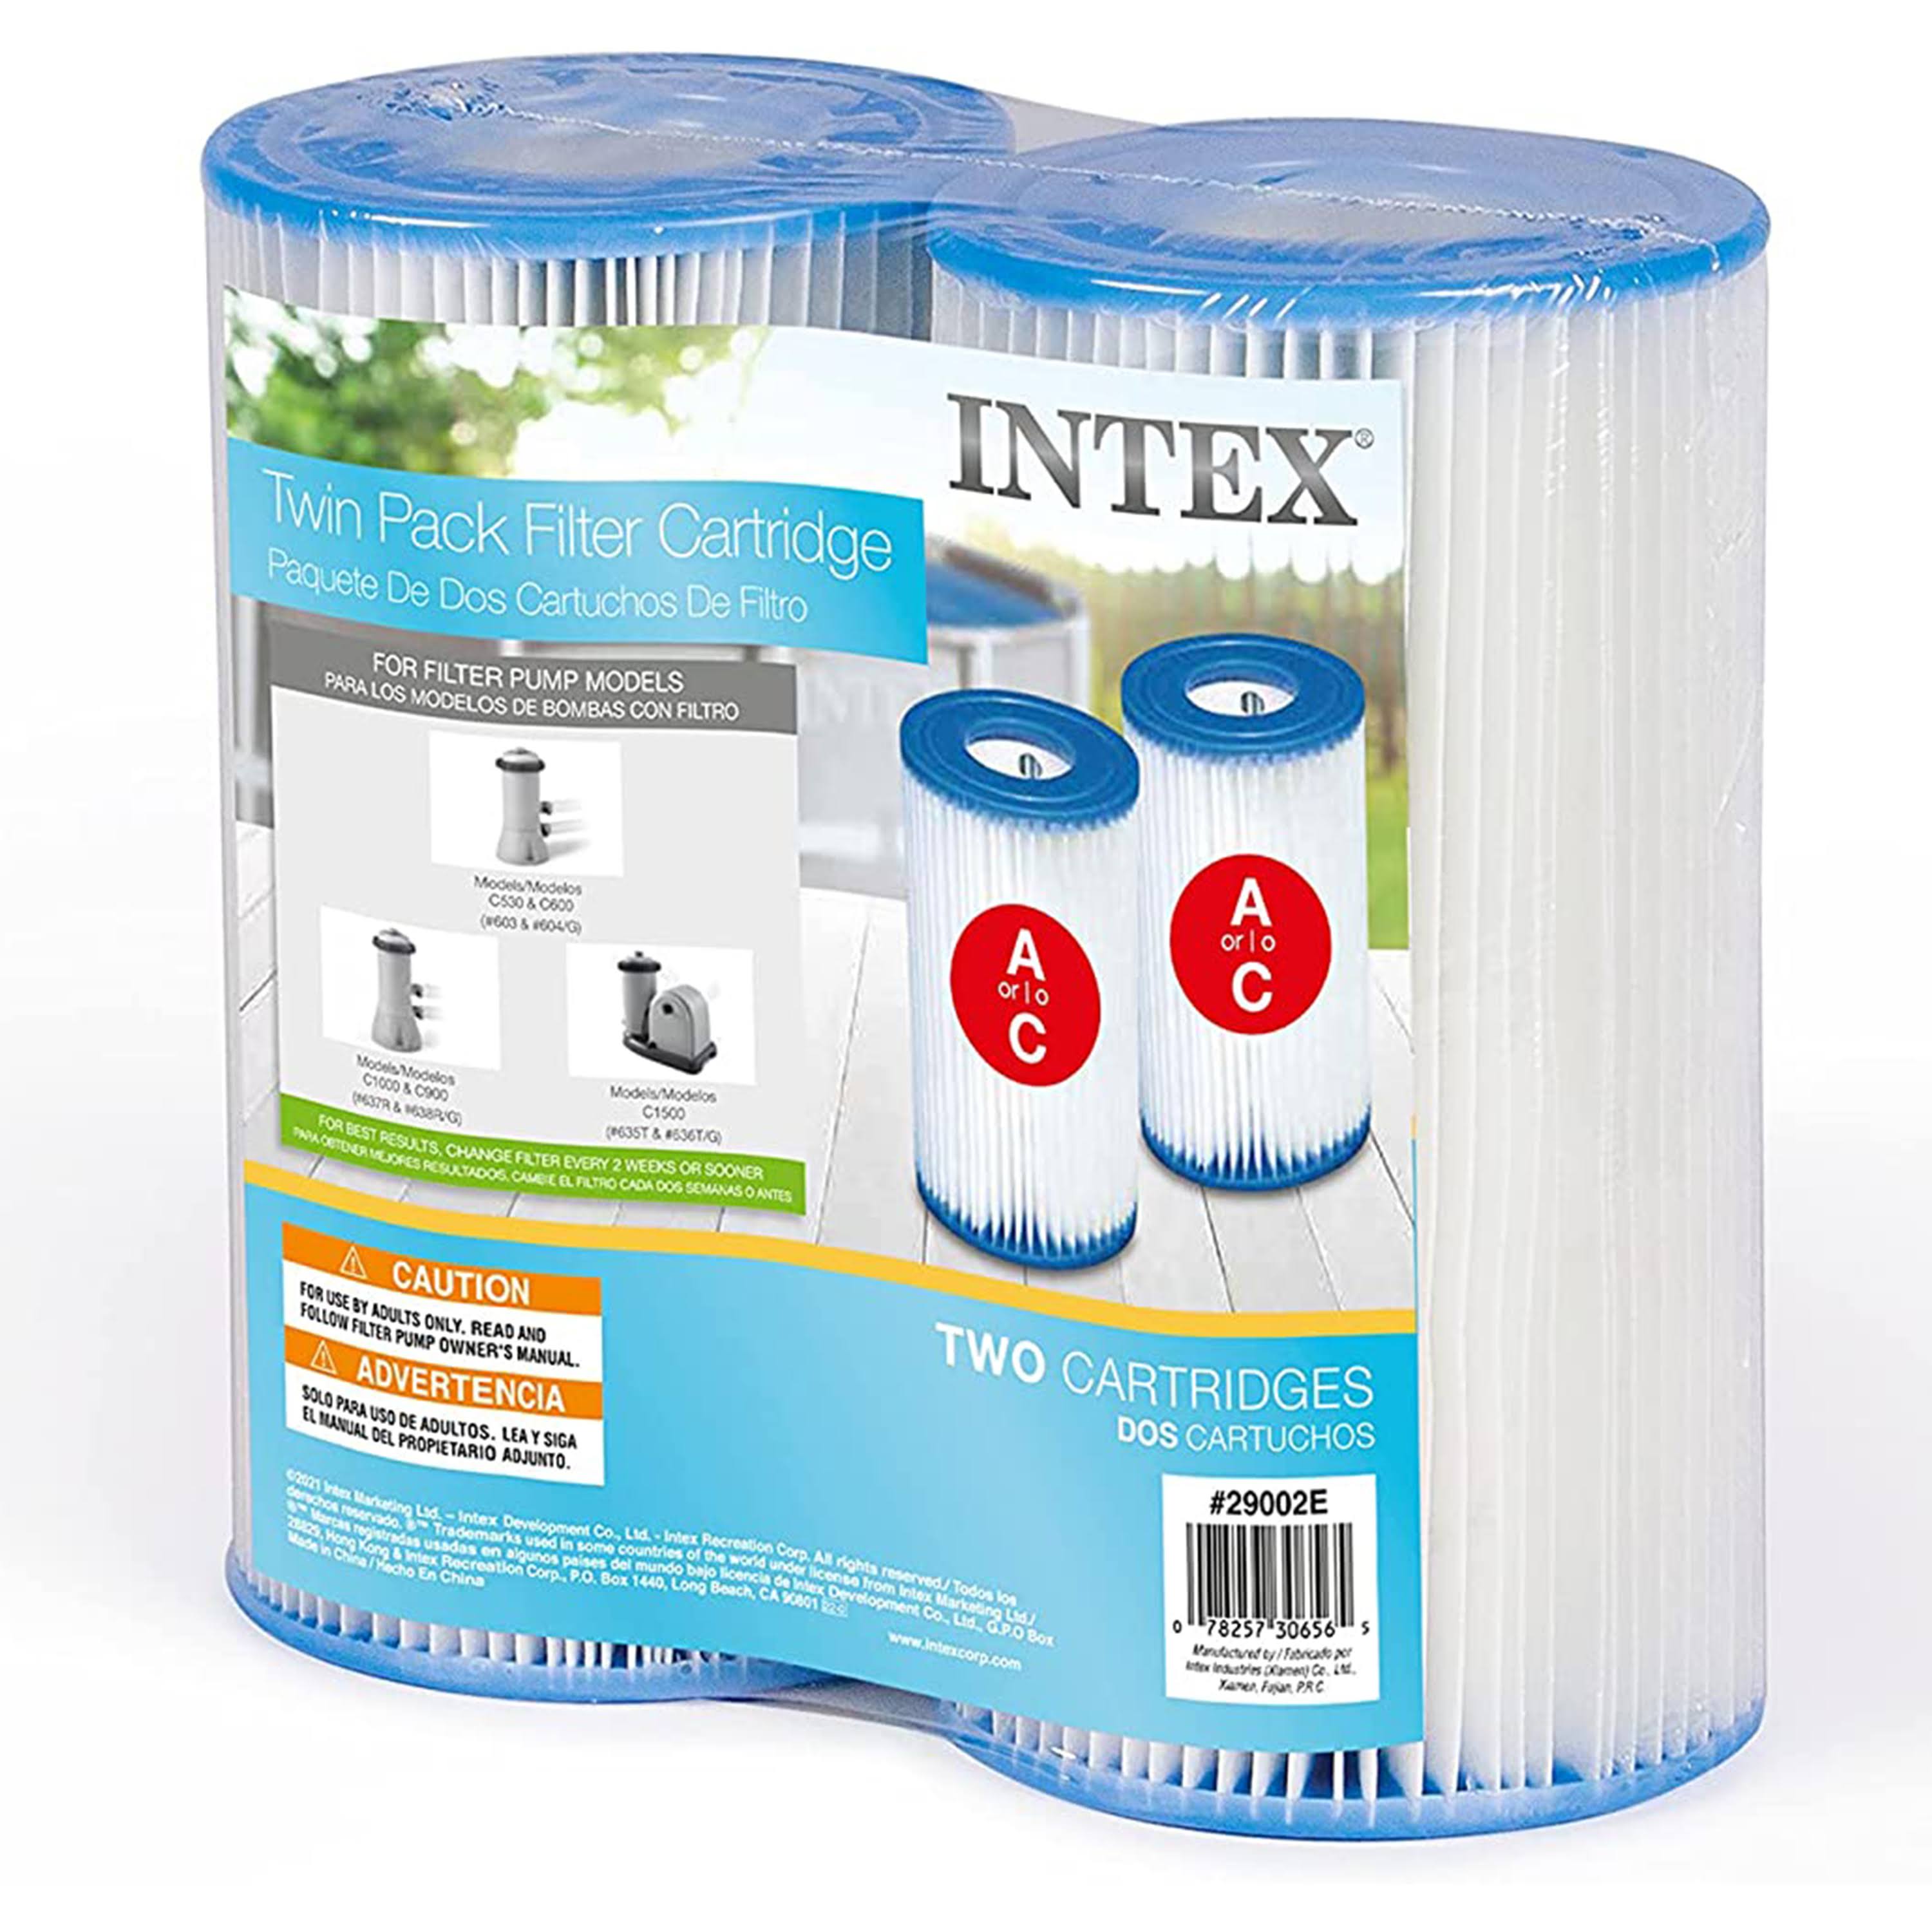 Intex 29002E Type A Filter Pool Filter Cartridge - Twin Pack